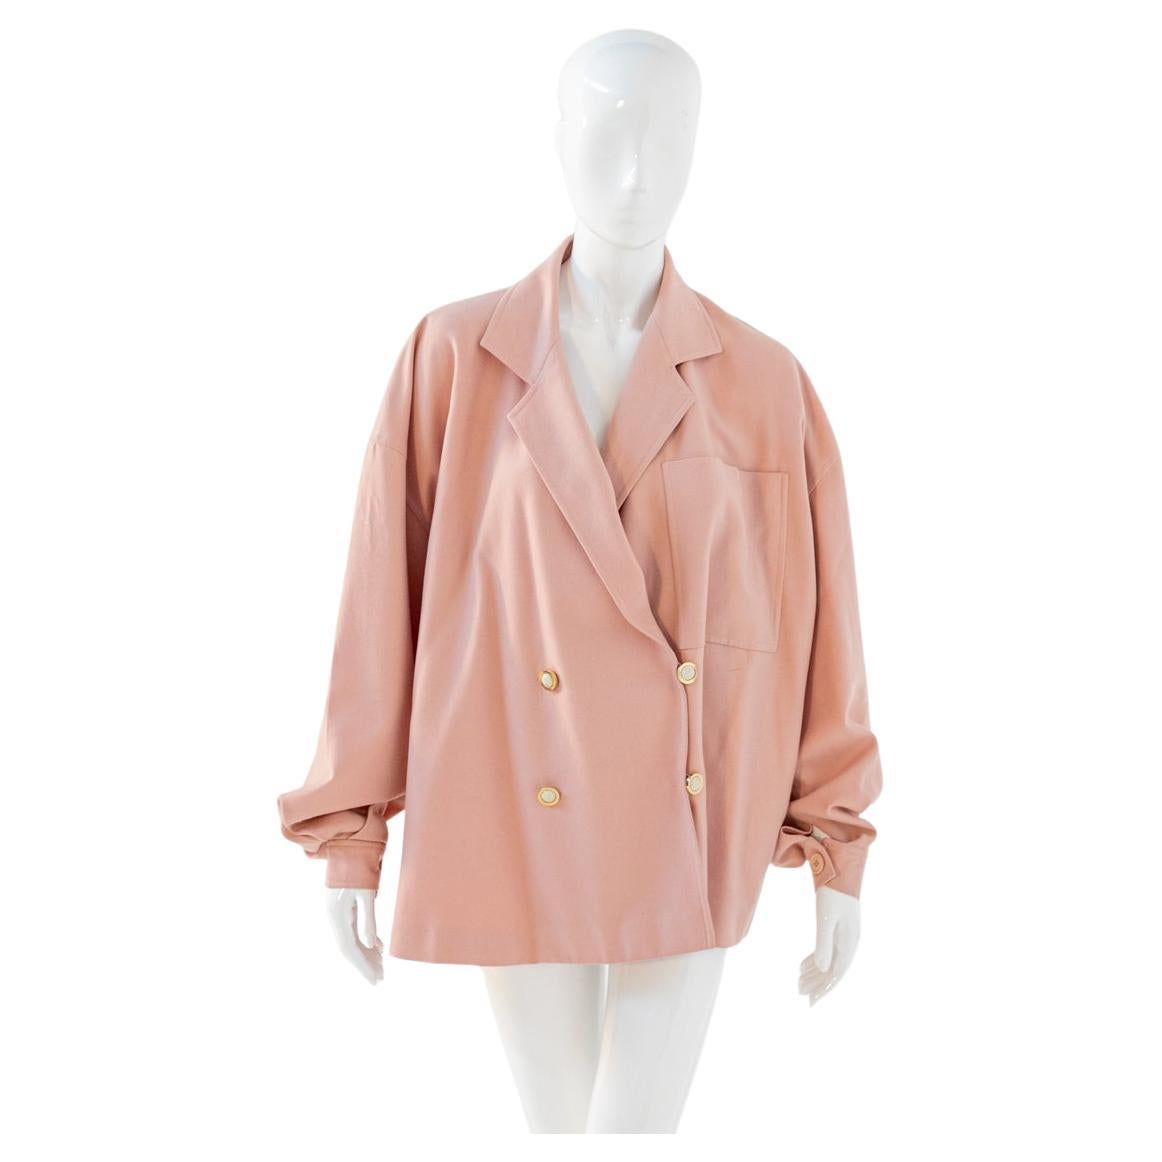 Gai Mattiolo Stylish Vintage Jacket in Pink Wool